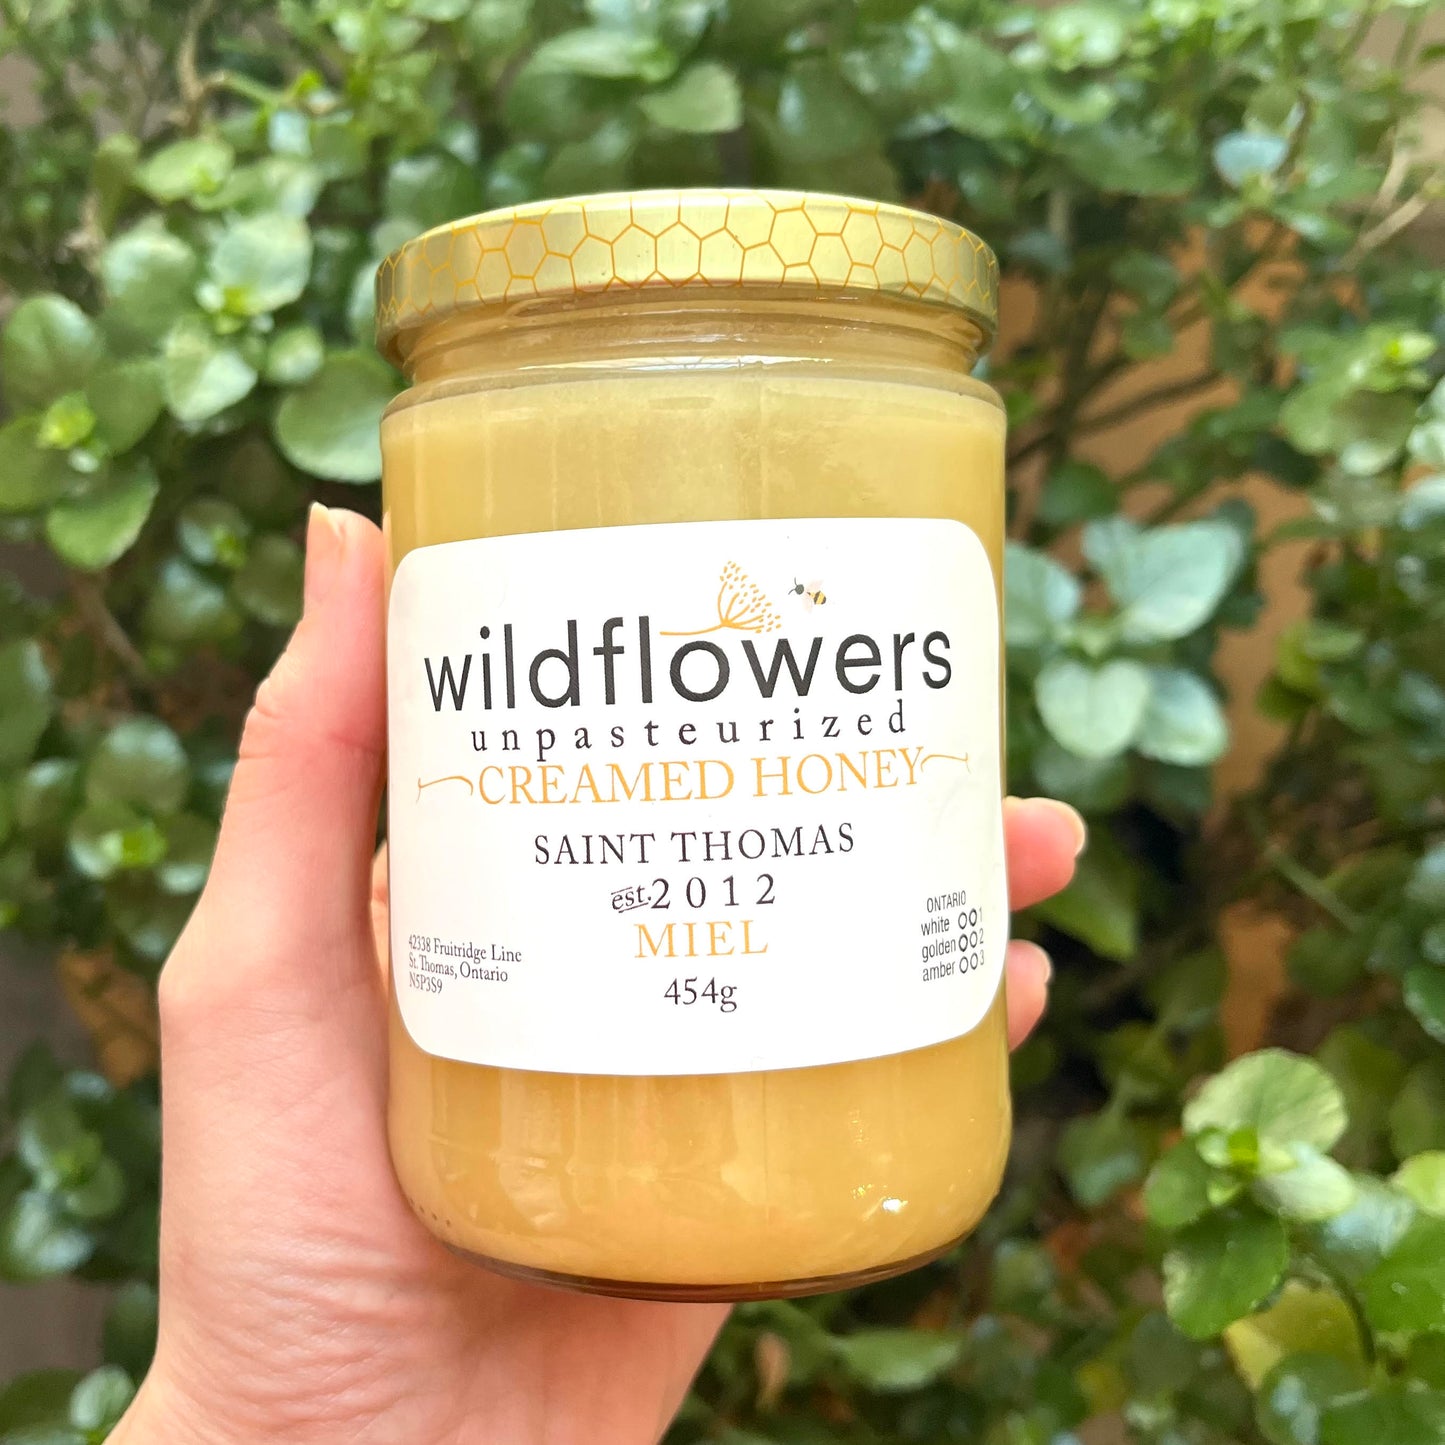 Wildflowers Unpasteurized Creamed Honey 454g